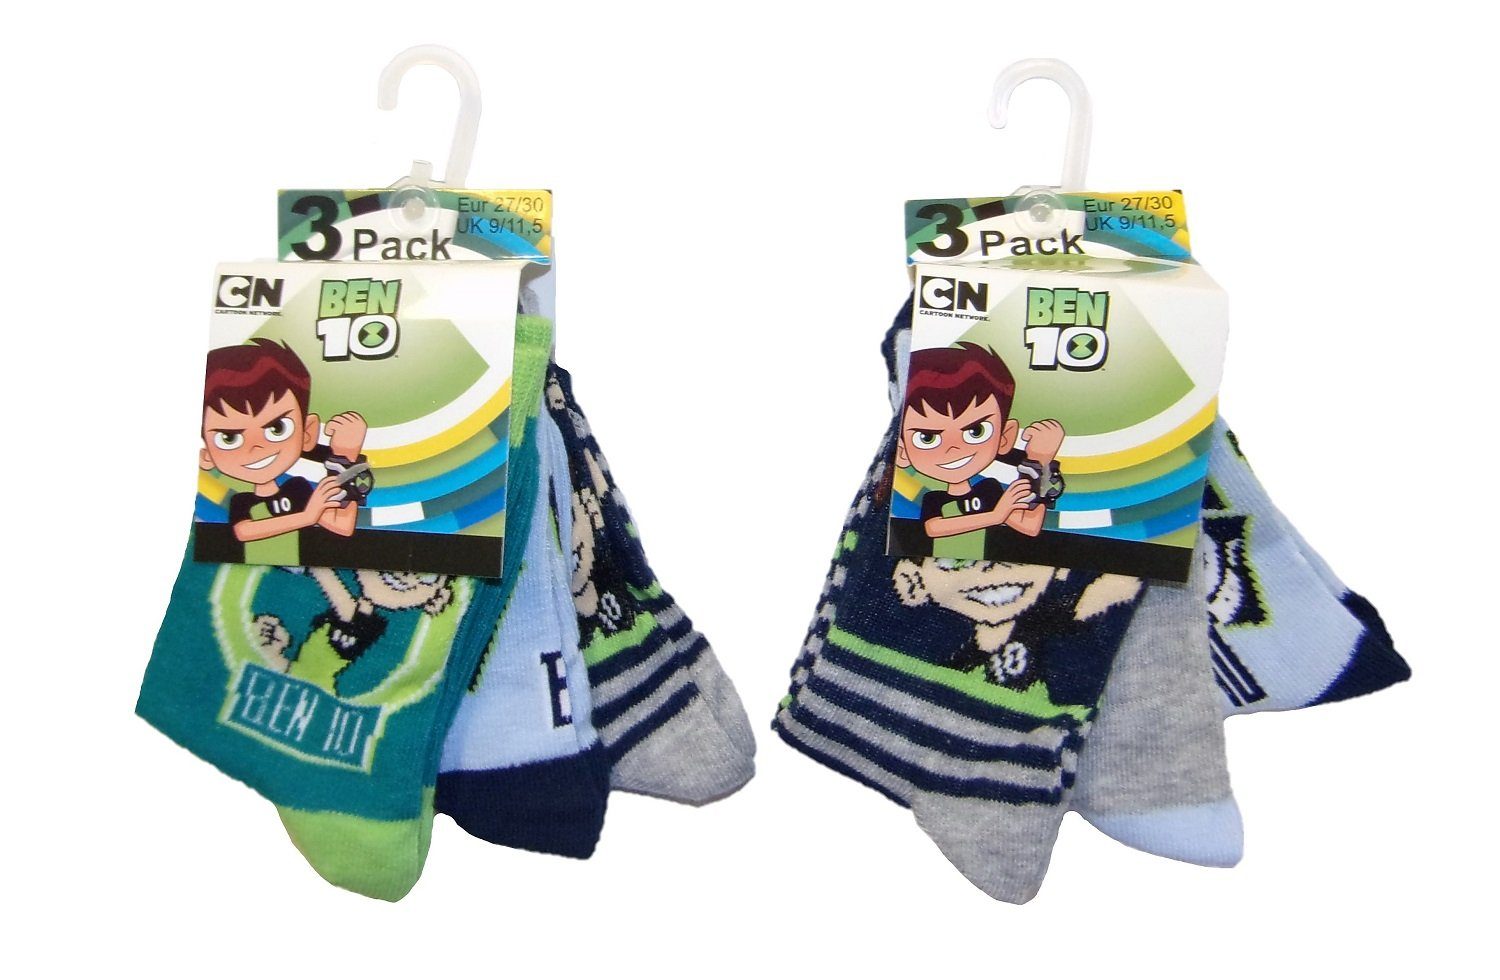 Kinder Socken 10 27/30 Network Pack) Socken für (Set, Cartoon 6-Paar) (6er Ben